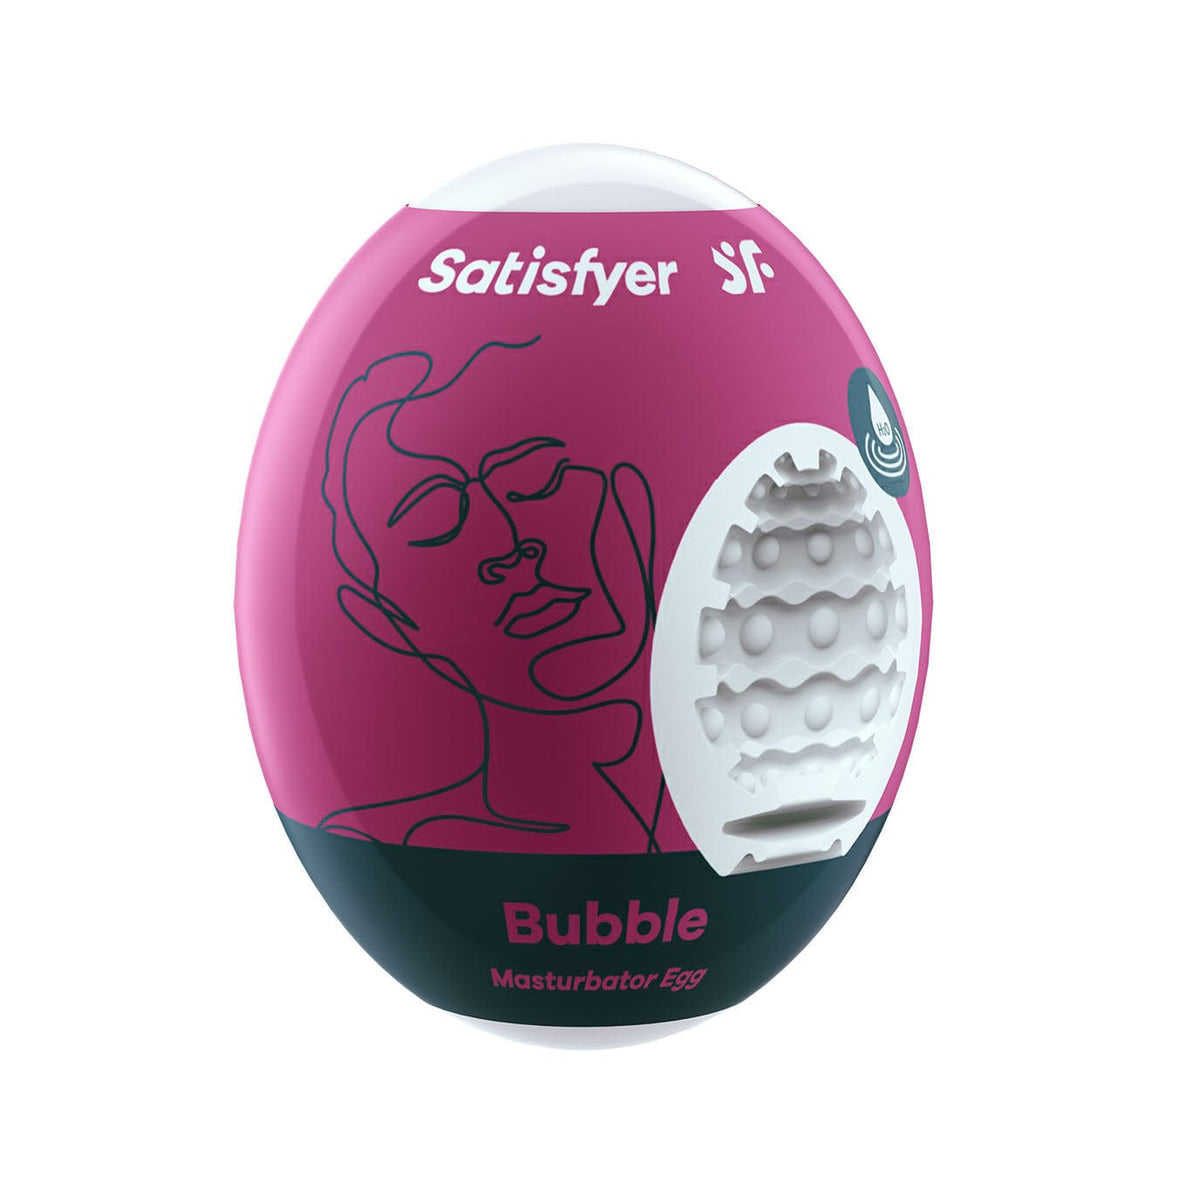 Satisfyer - Bubble Masturbator Egg (Pink) -  Masturbator Egg (Non Vibration)  Durio.sg